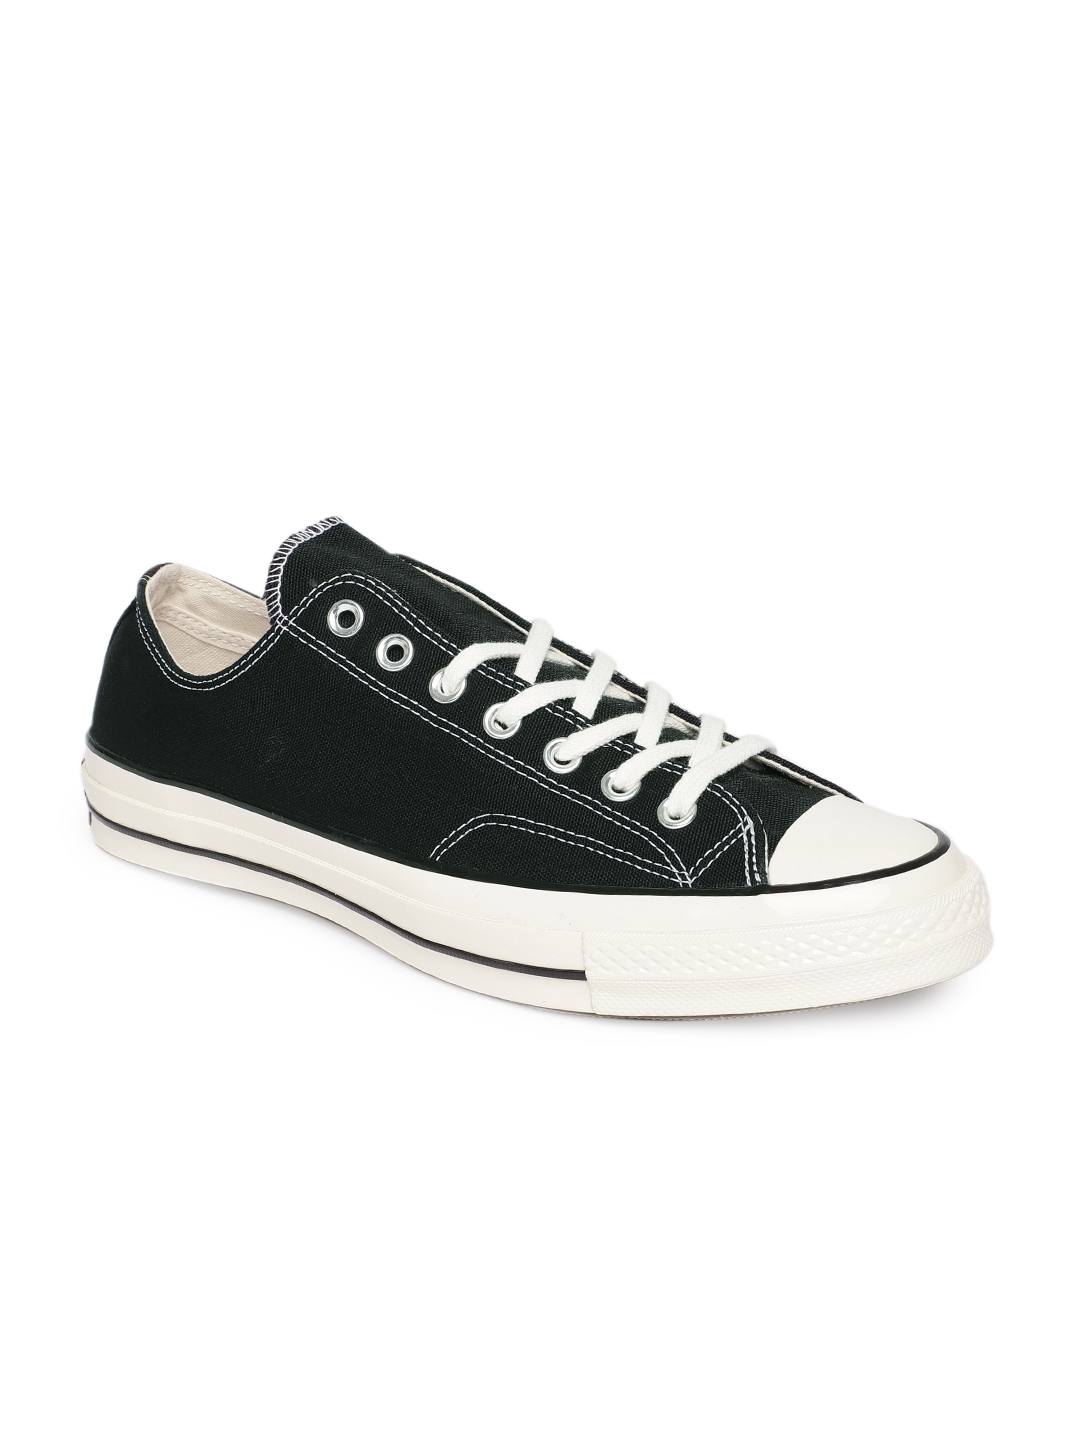 Buy Converse Vintage Canvas Chuck 70 Black Sneakers - Casual Shoes for Men  2419616 | Myntra